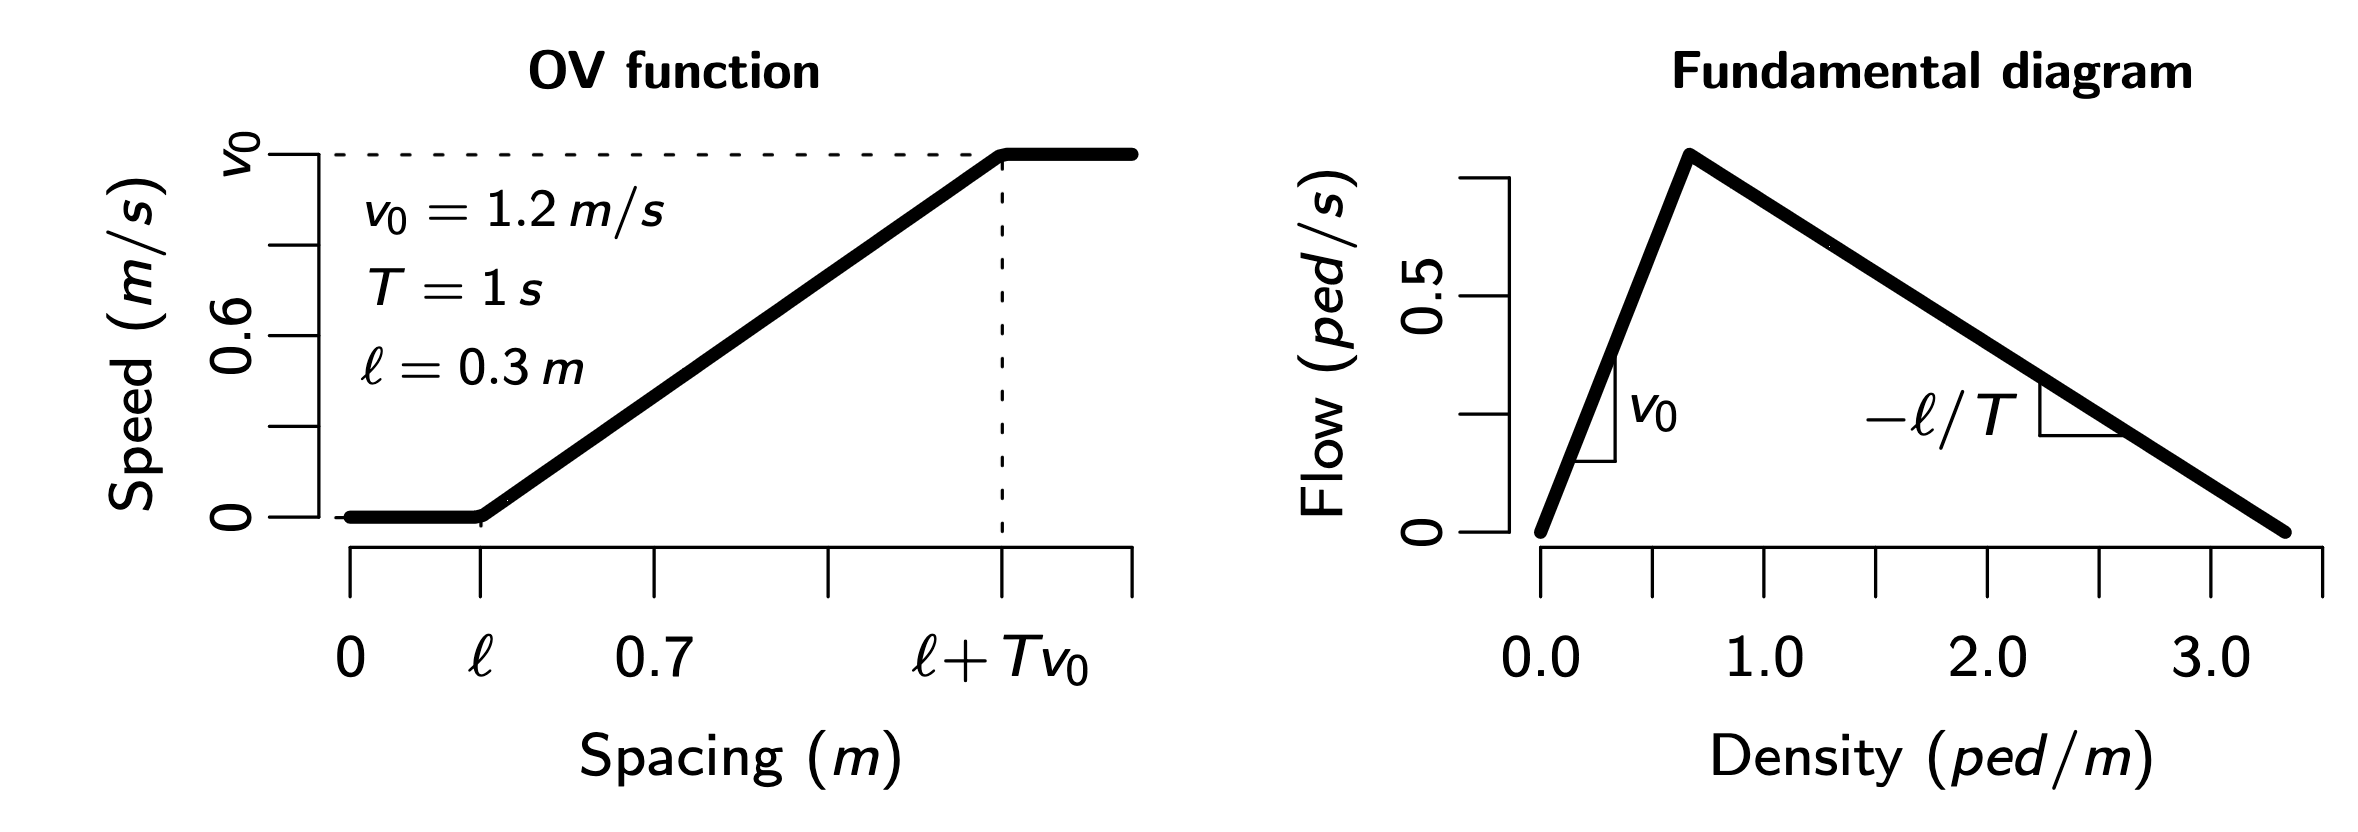 OV speed function vs fundamental diagram